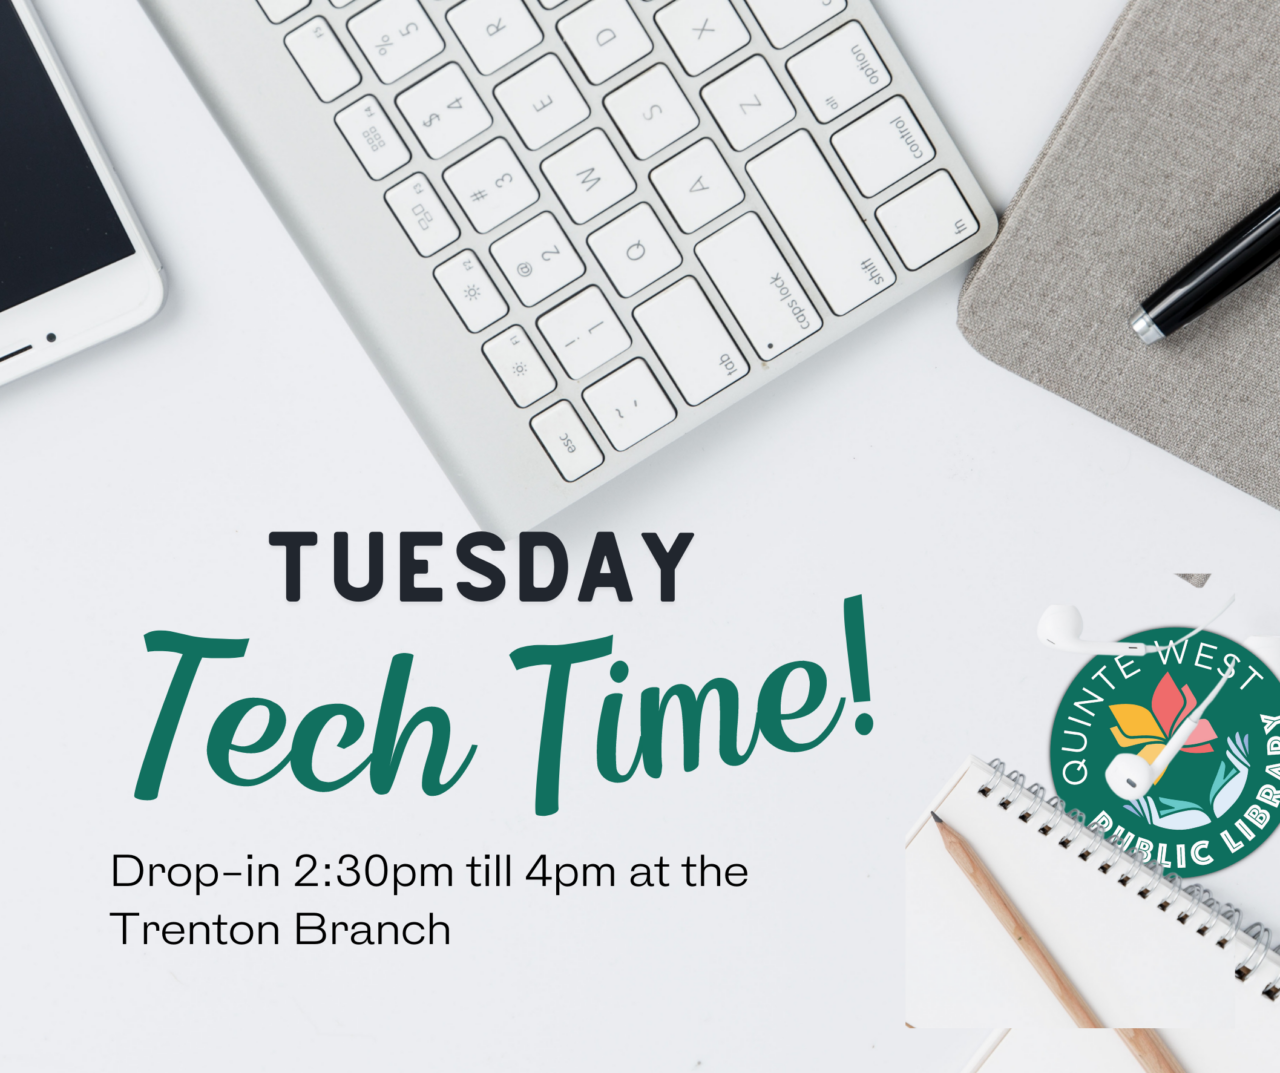 Tuesday Tech Time